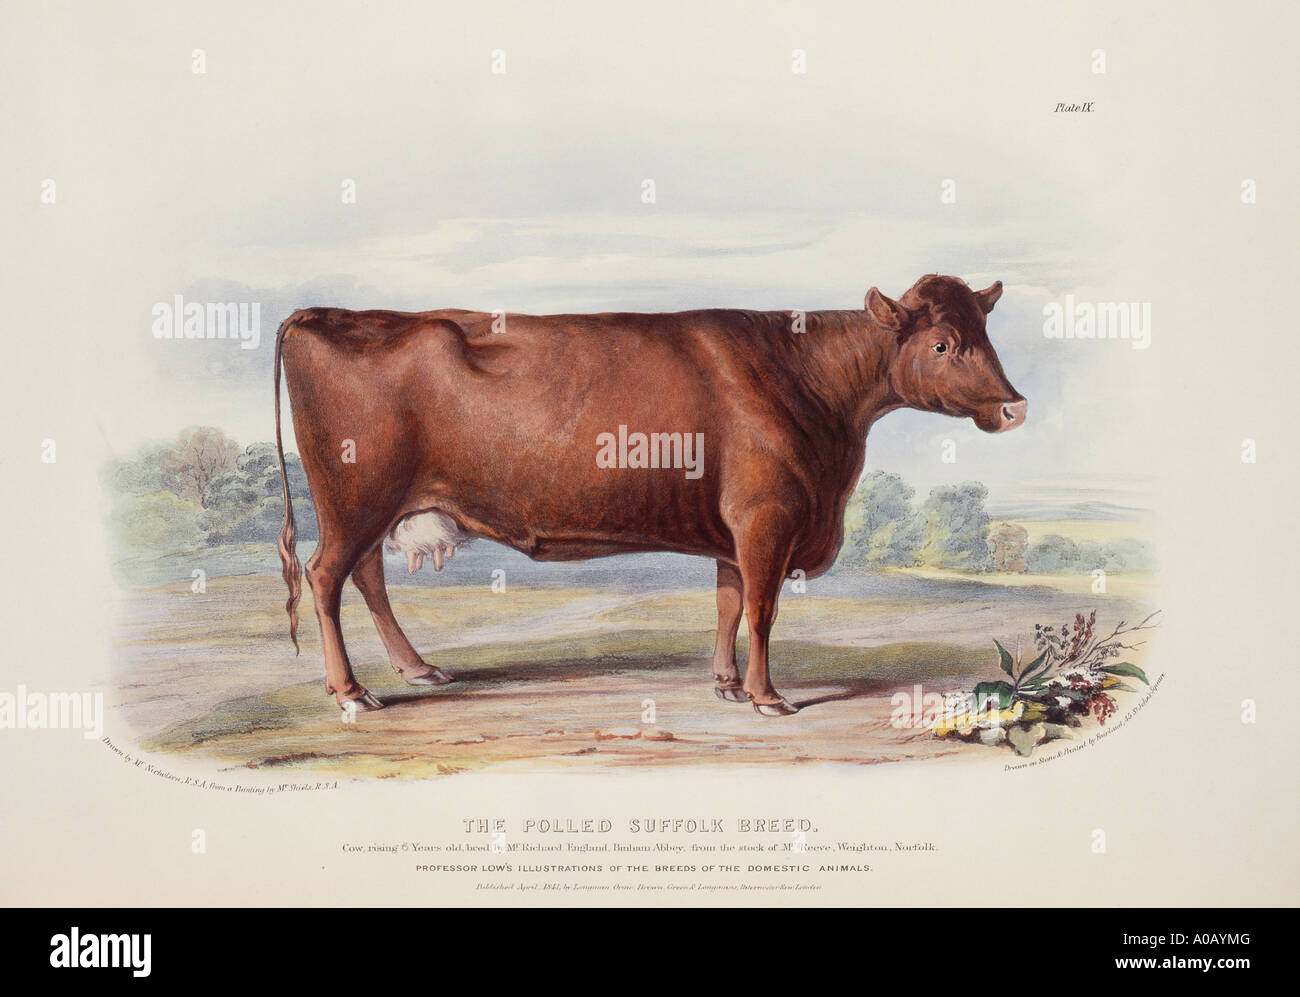 Bos Taurus Cattle Stock Photo Alamy